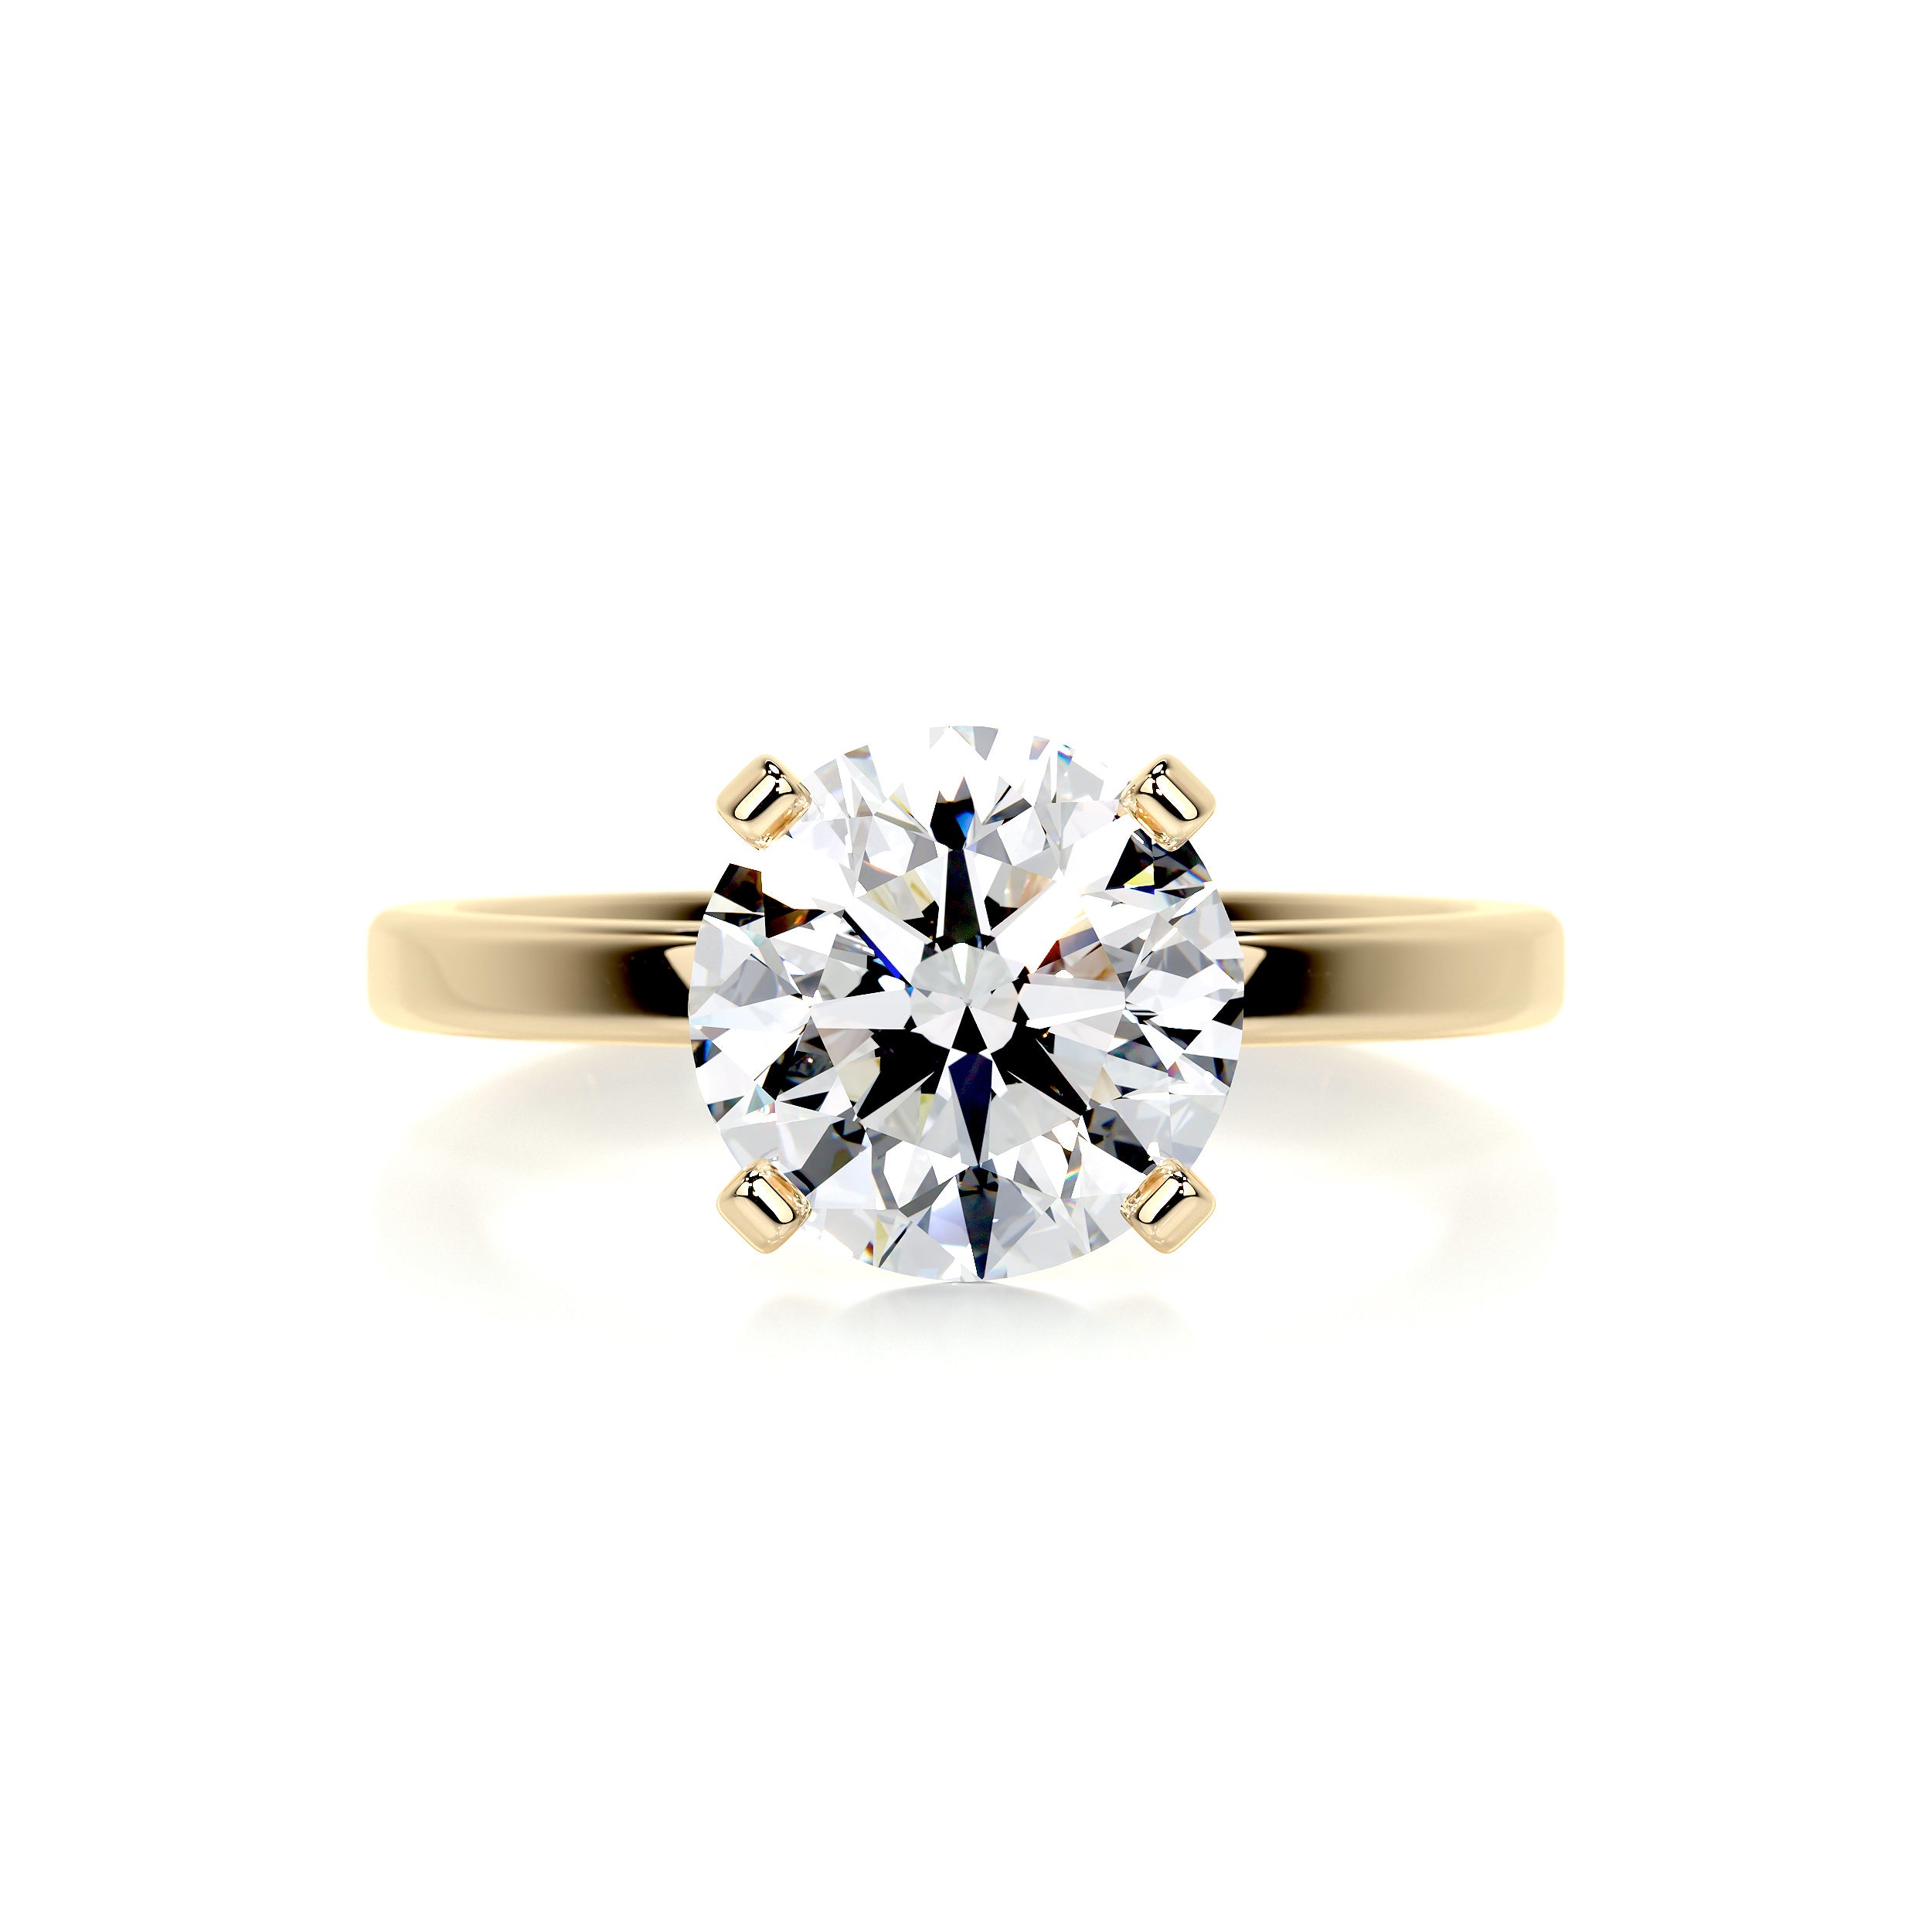 Jessica Diamond Engagement Ring   (2 Carat) -18K Yellow Gold